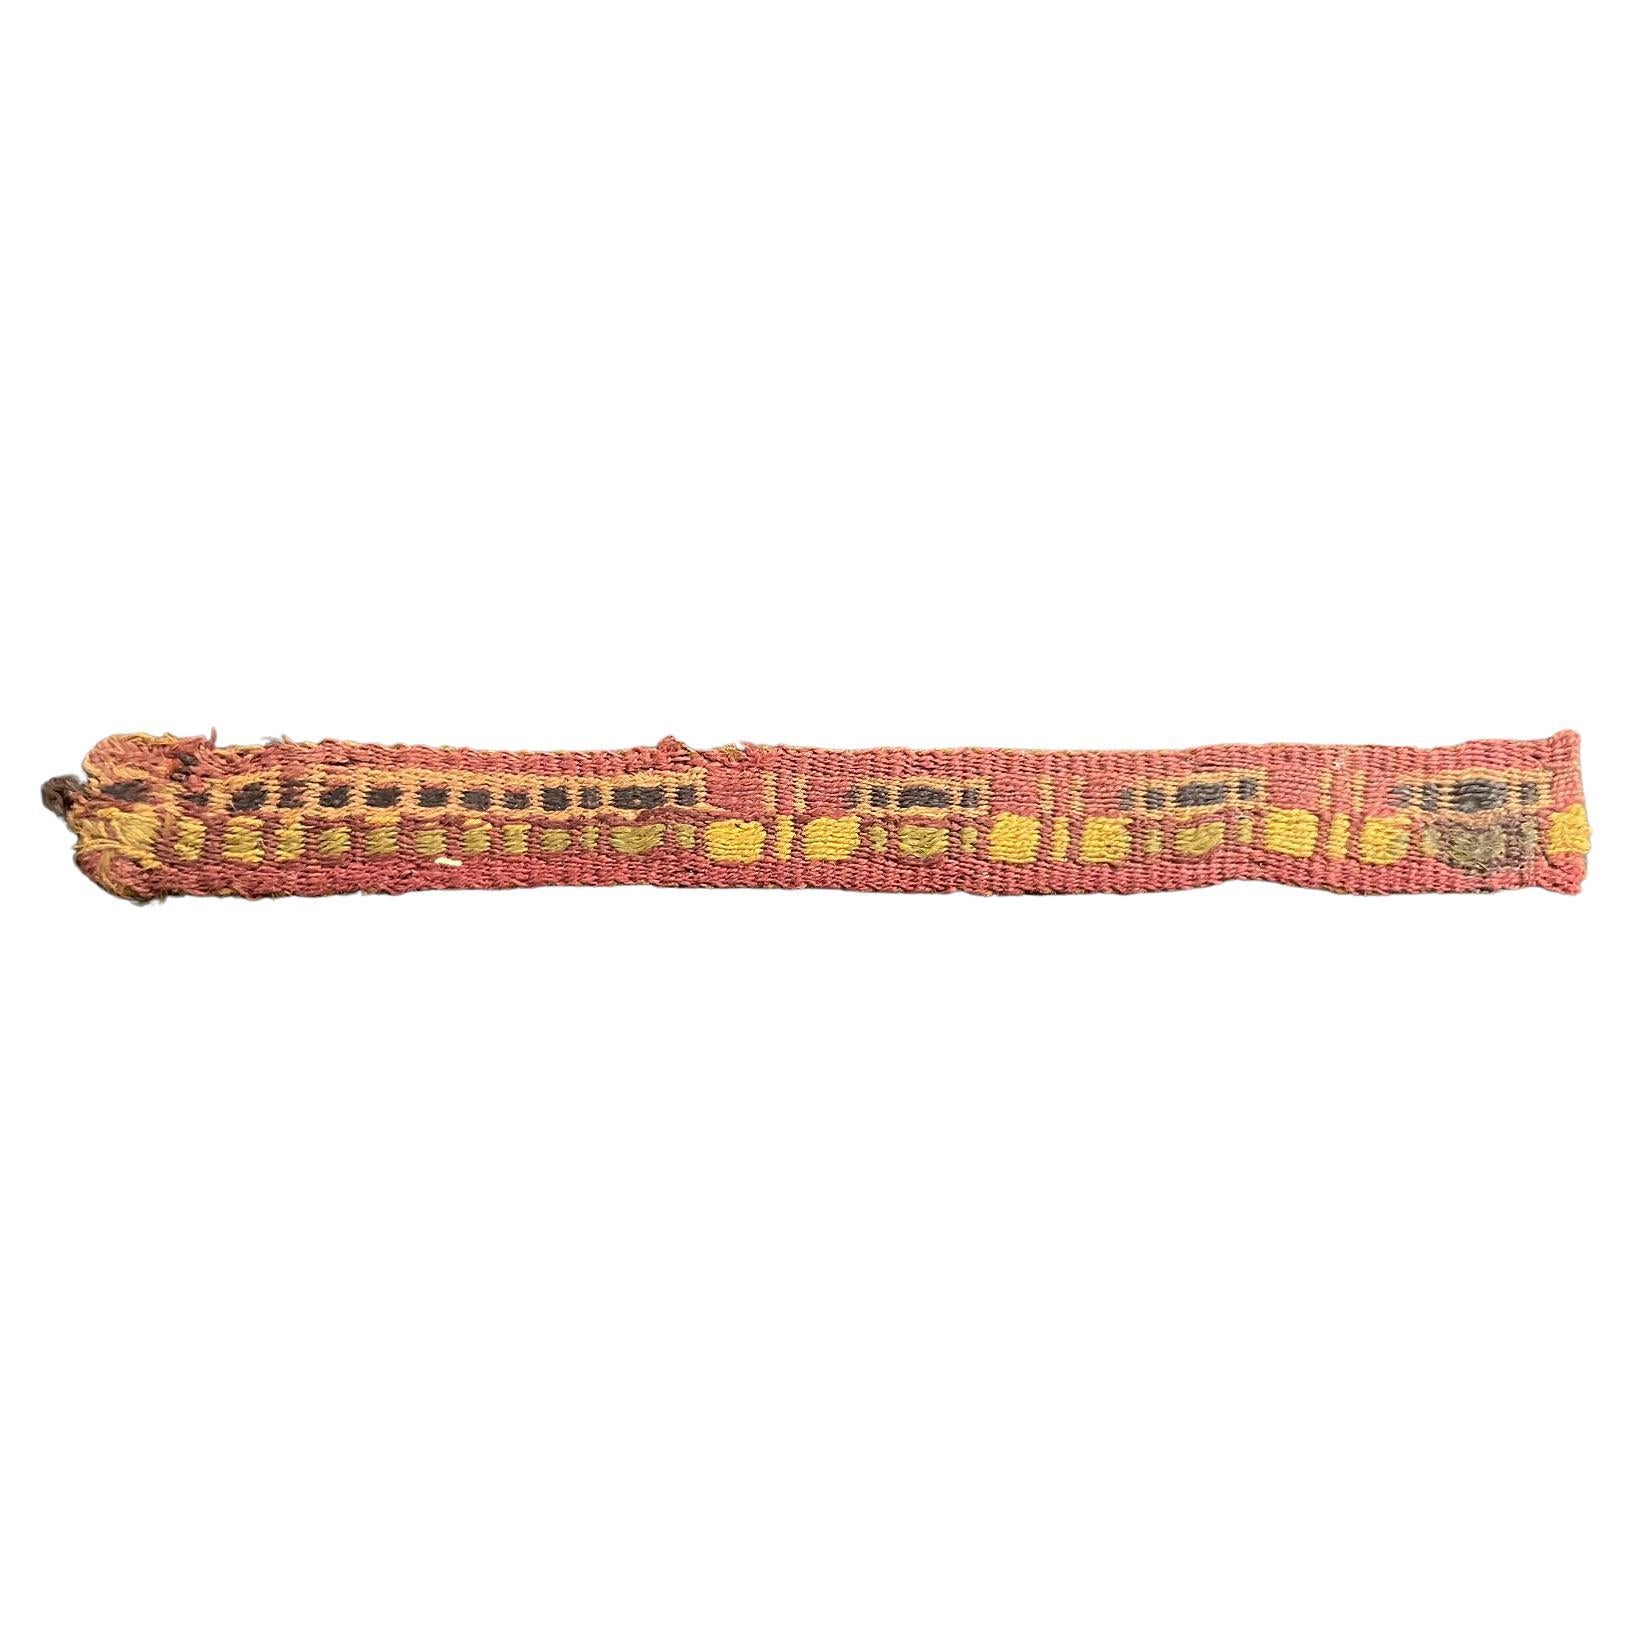 Chancay Pre-Columbian Textile Fragment, Peru ca 1100-1400 AD, Ex Ferdinand Anton For Sale